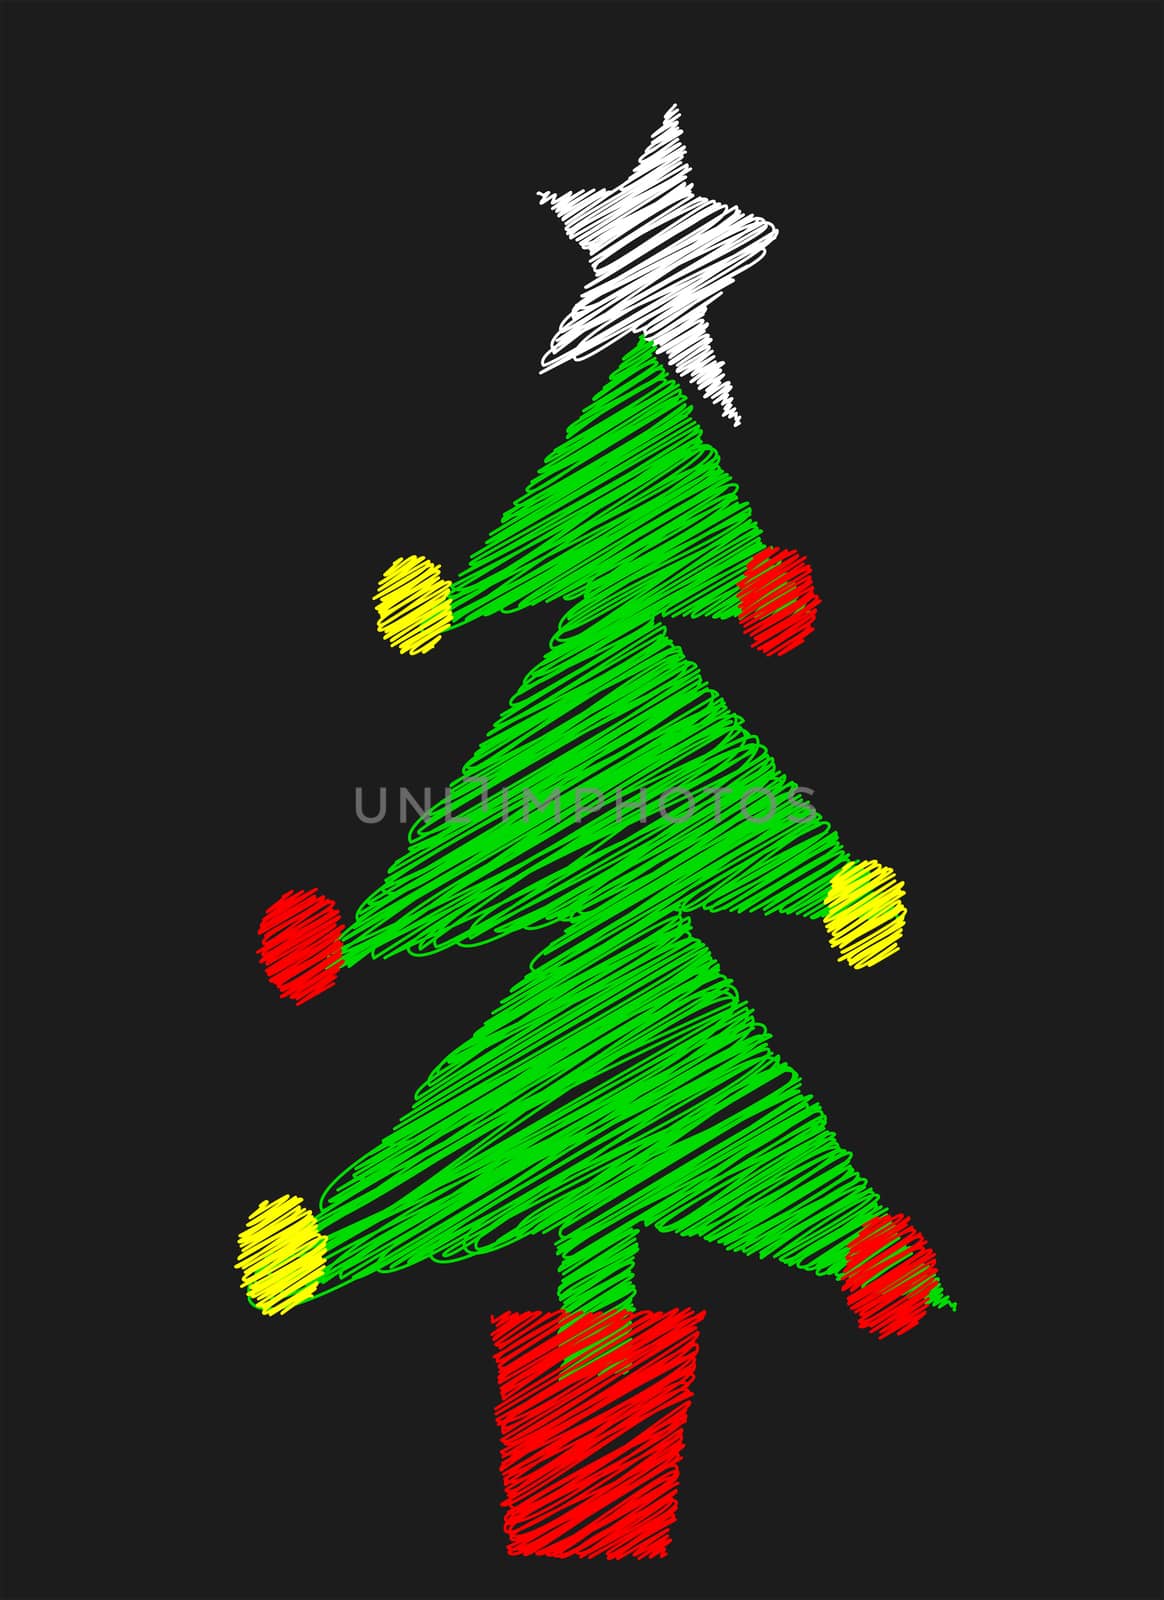 A Christmas tree drawn on a blackboard